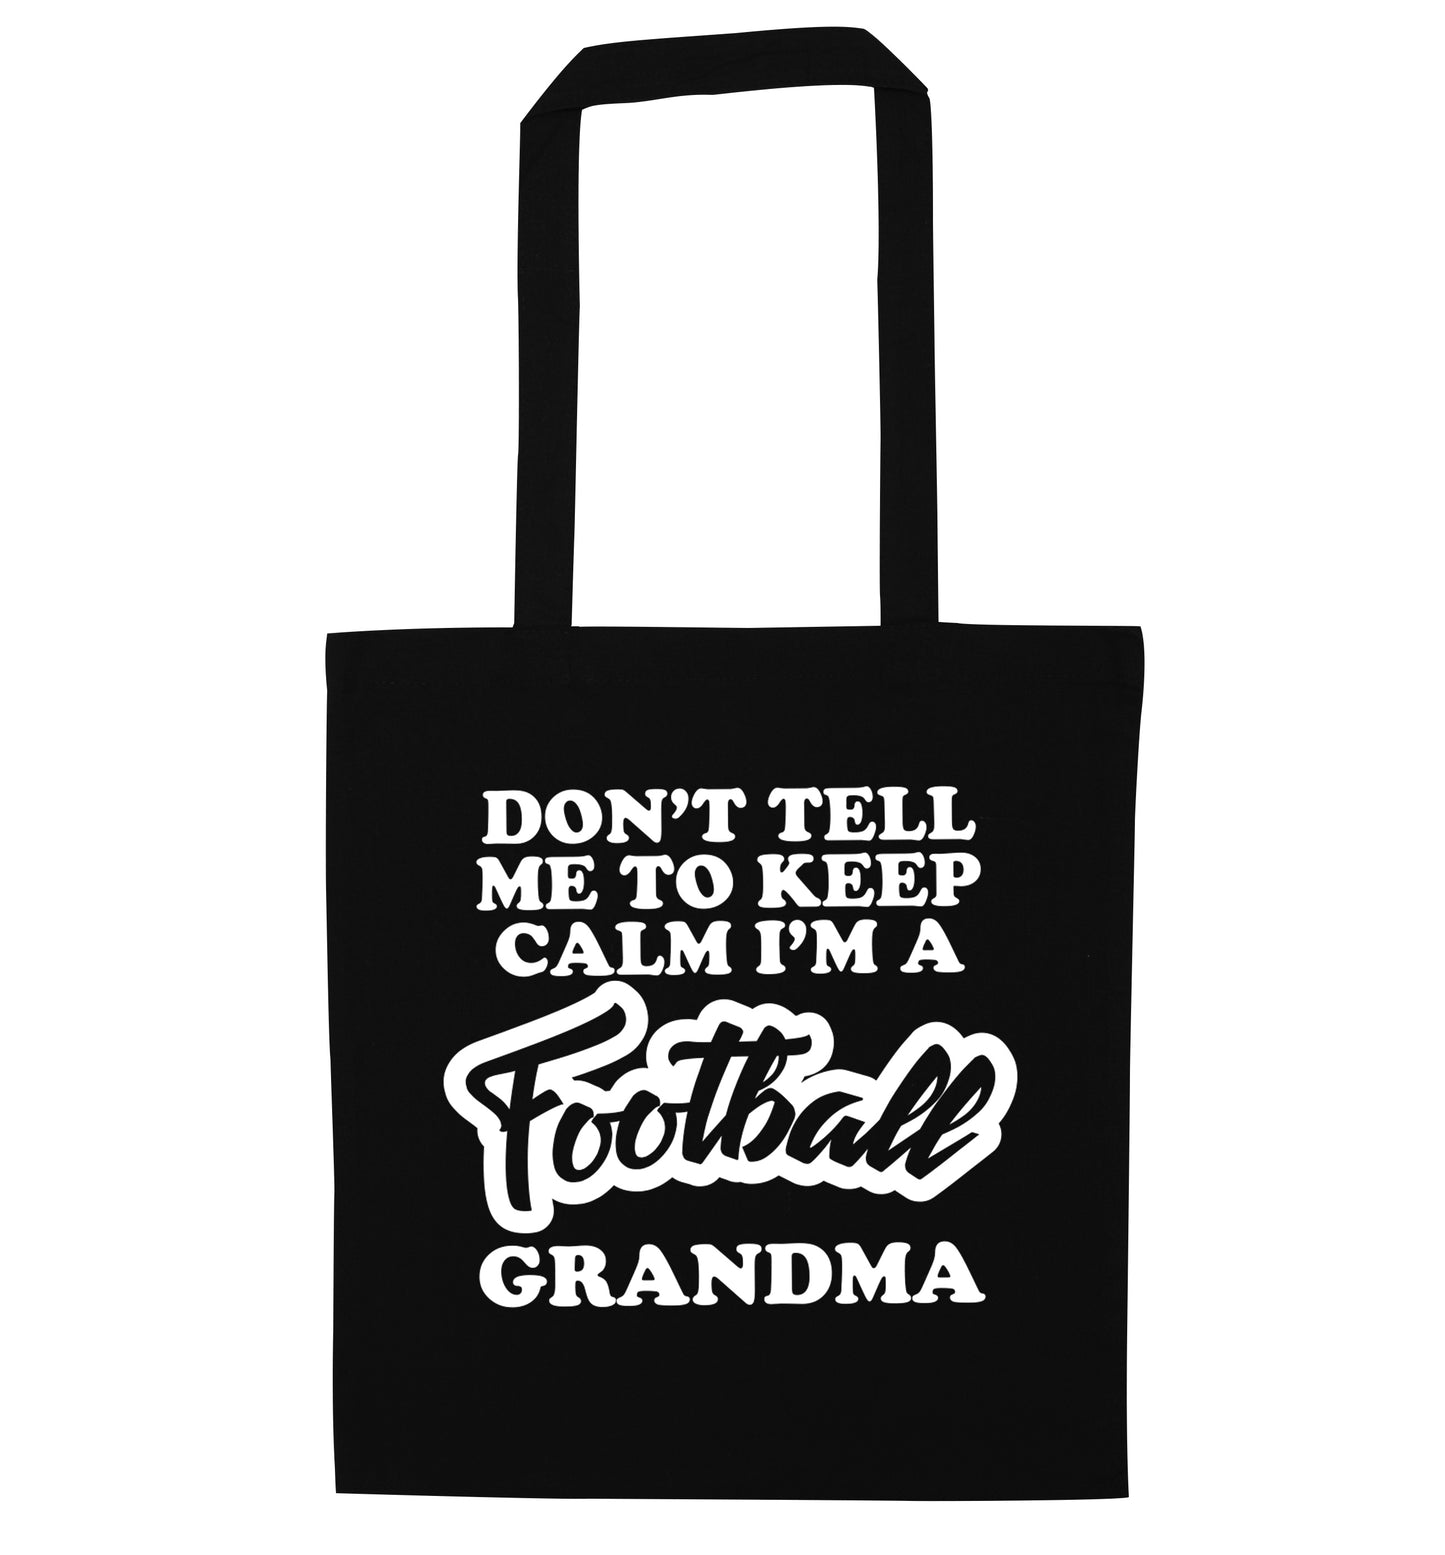 Don't tell me to keep calm I'm a football grandma black tote bag